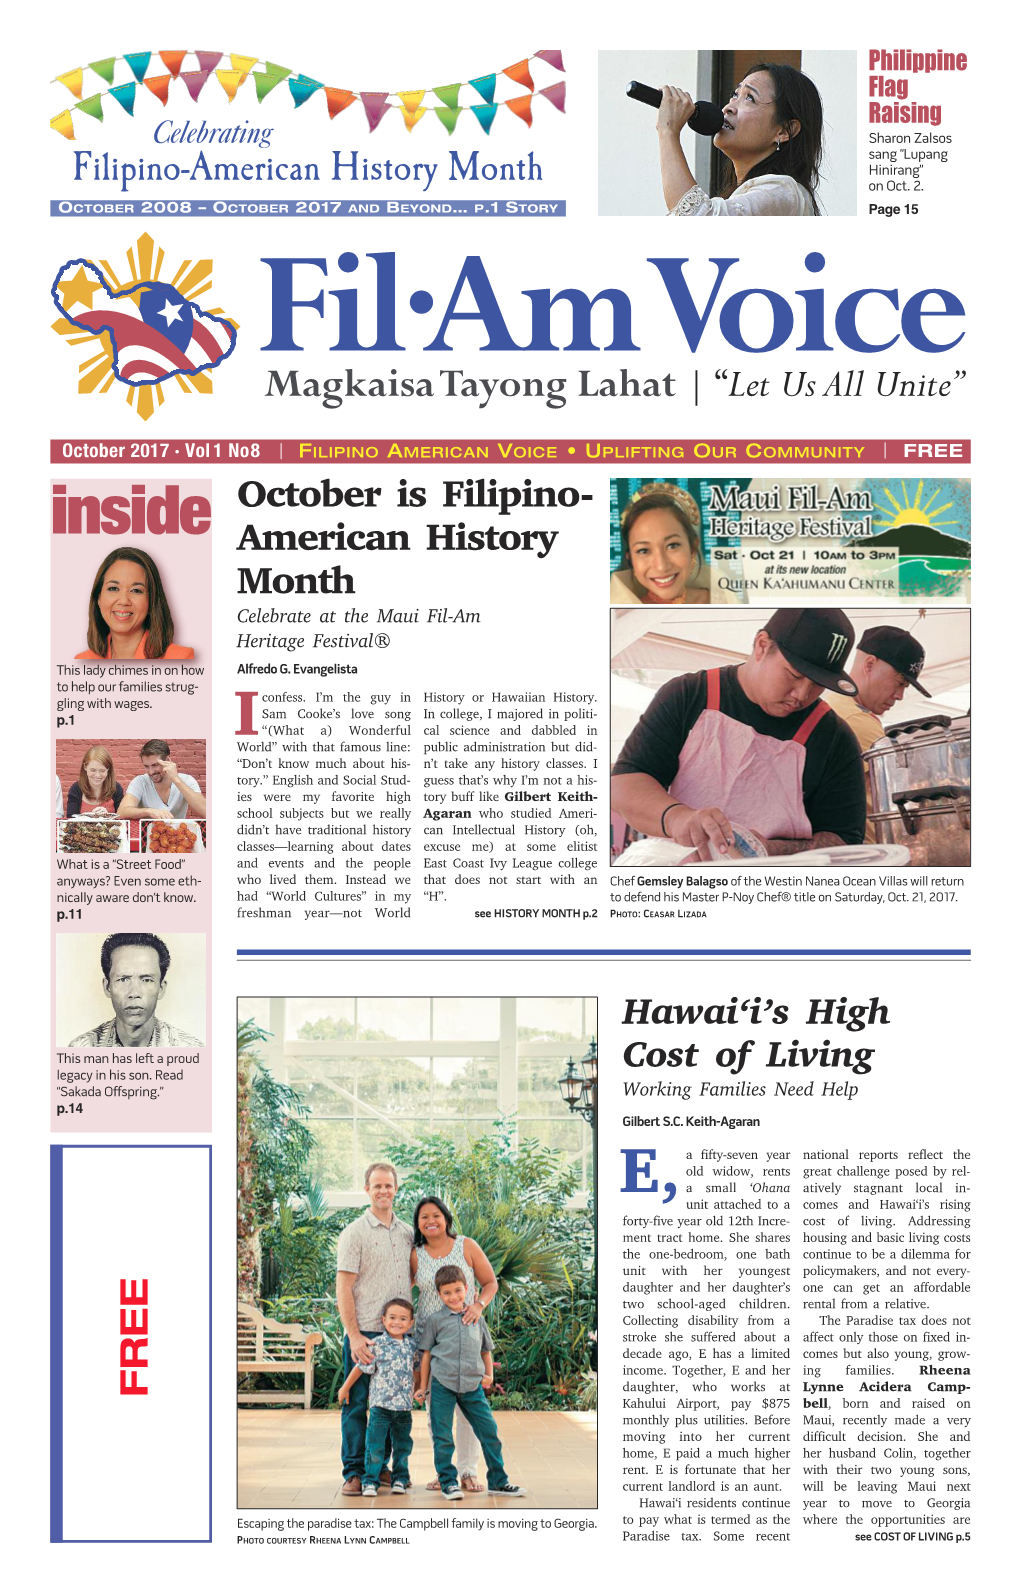 Filipino-American History Month on Oct